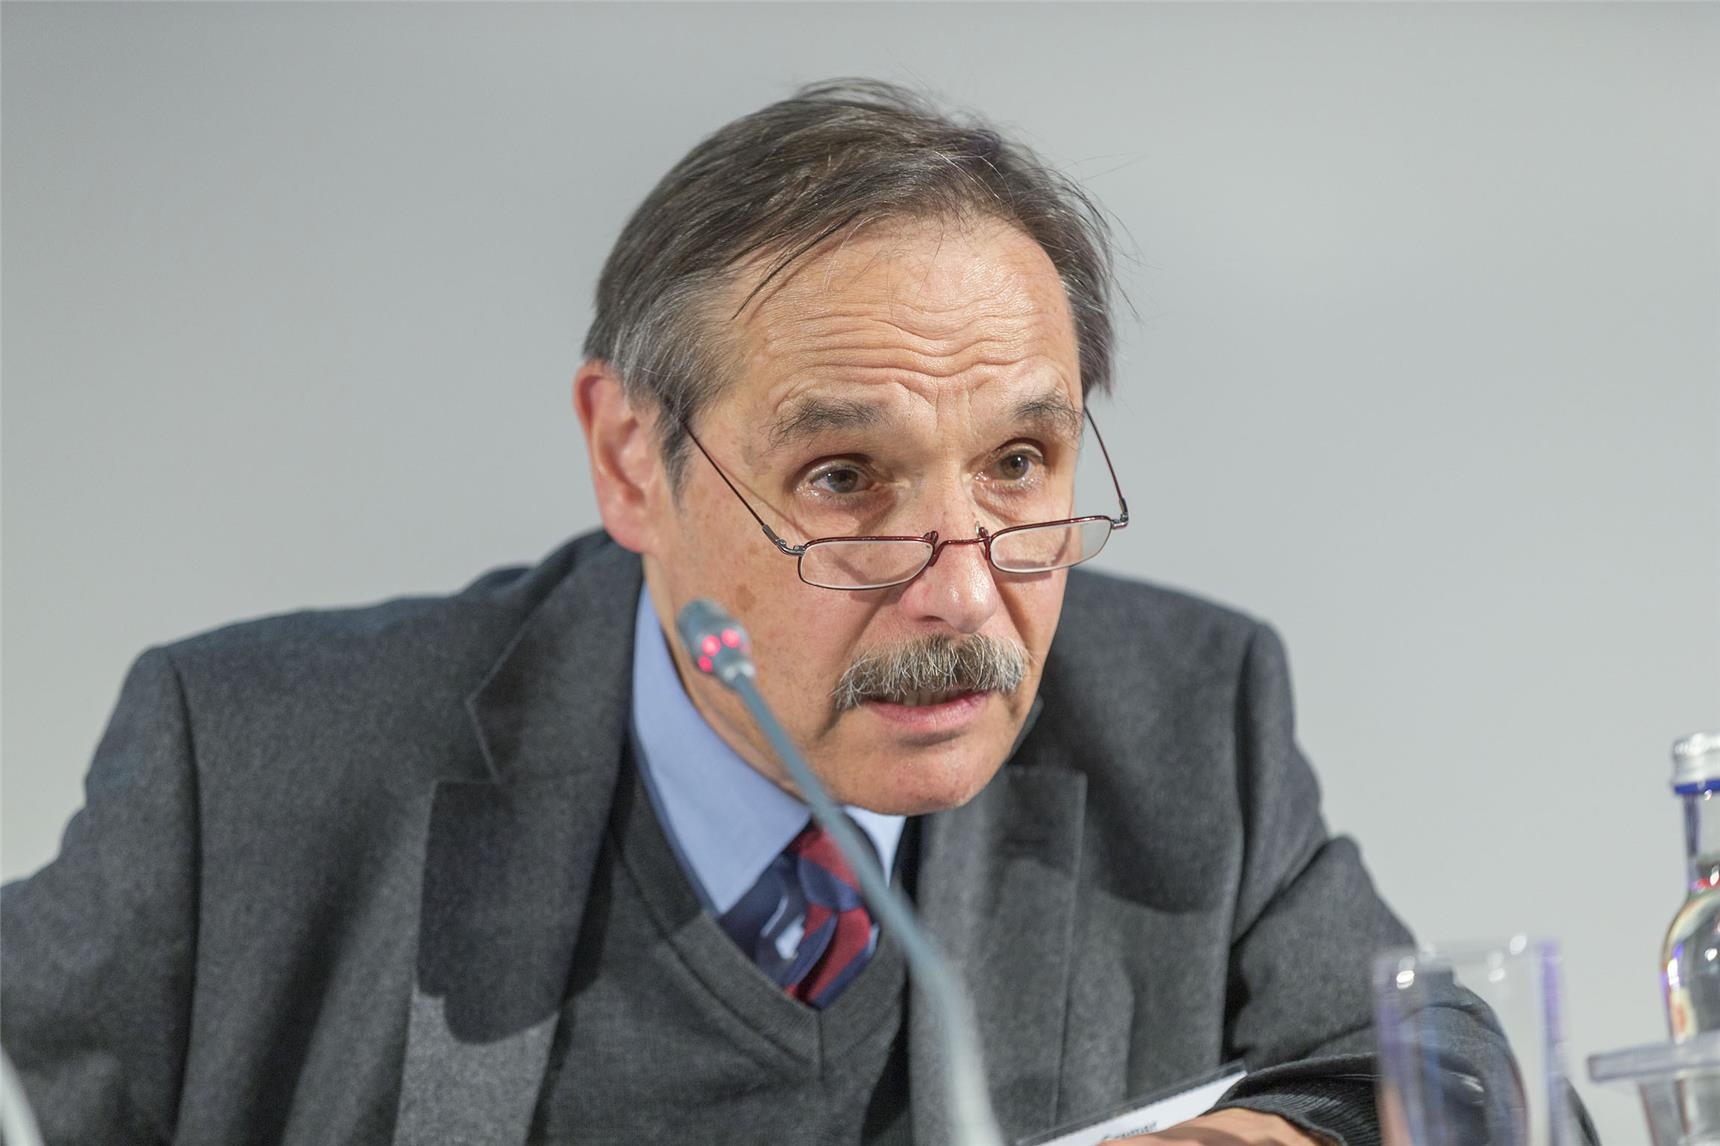 Caritas-Generalsekretär Prof. Dr. Georg Cremer am Mikrofon (Moosburger/DCV)